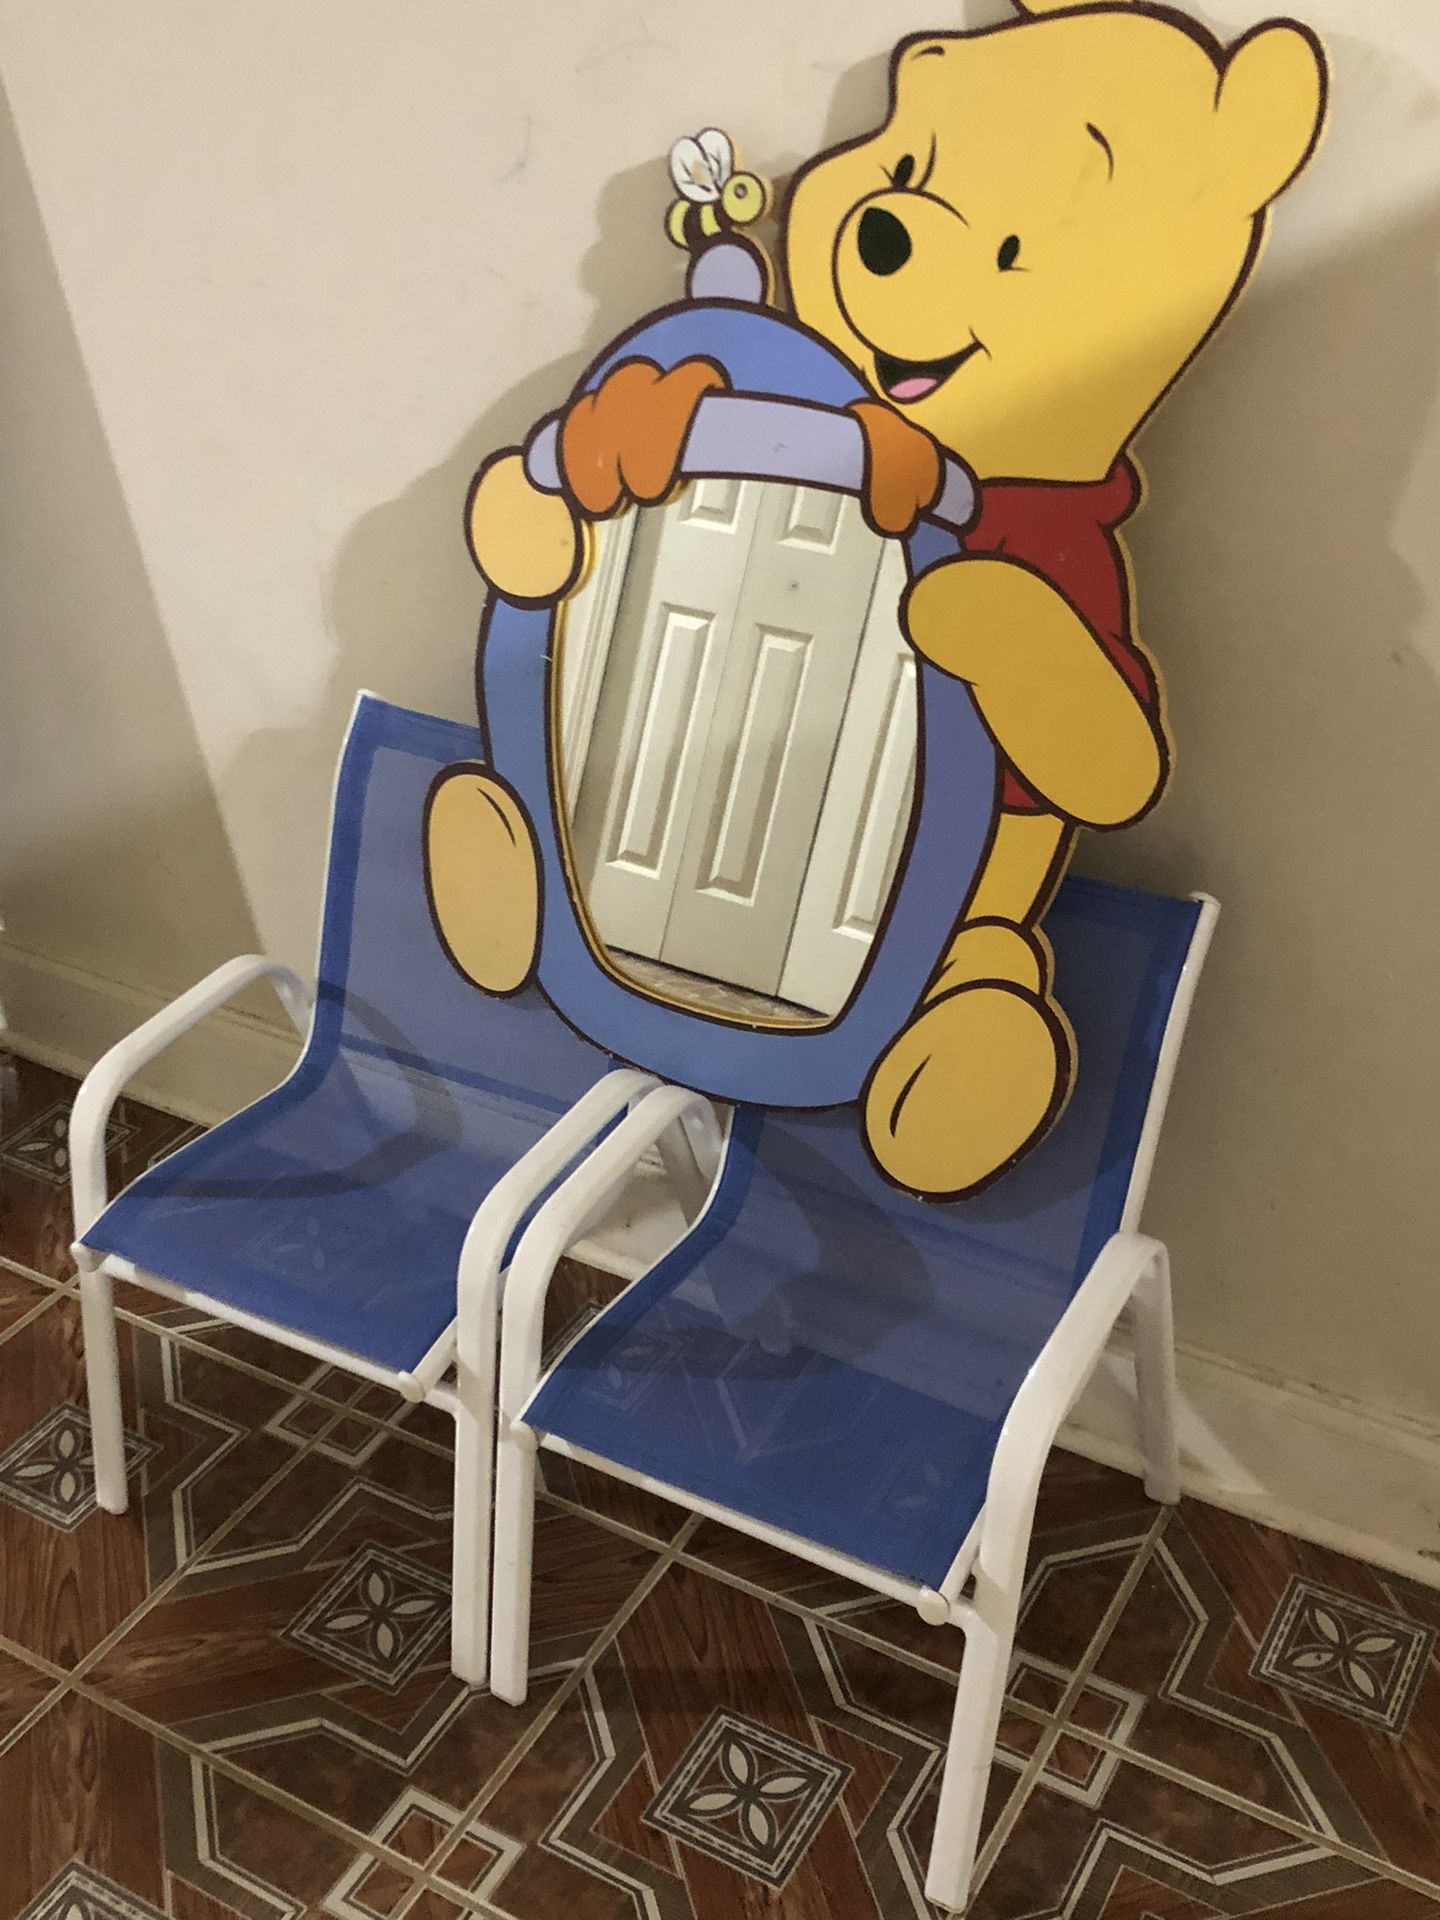 Winnie-the-Pooh mirror + 2 chairs